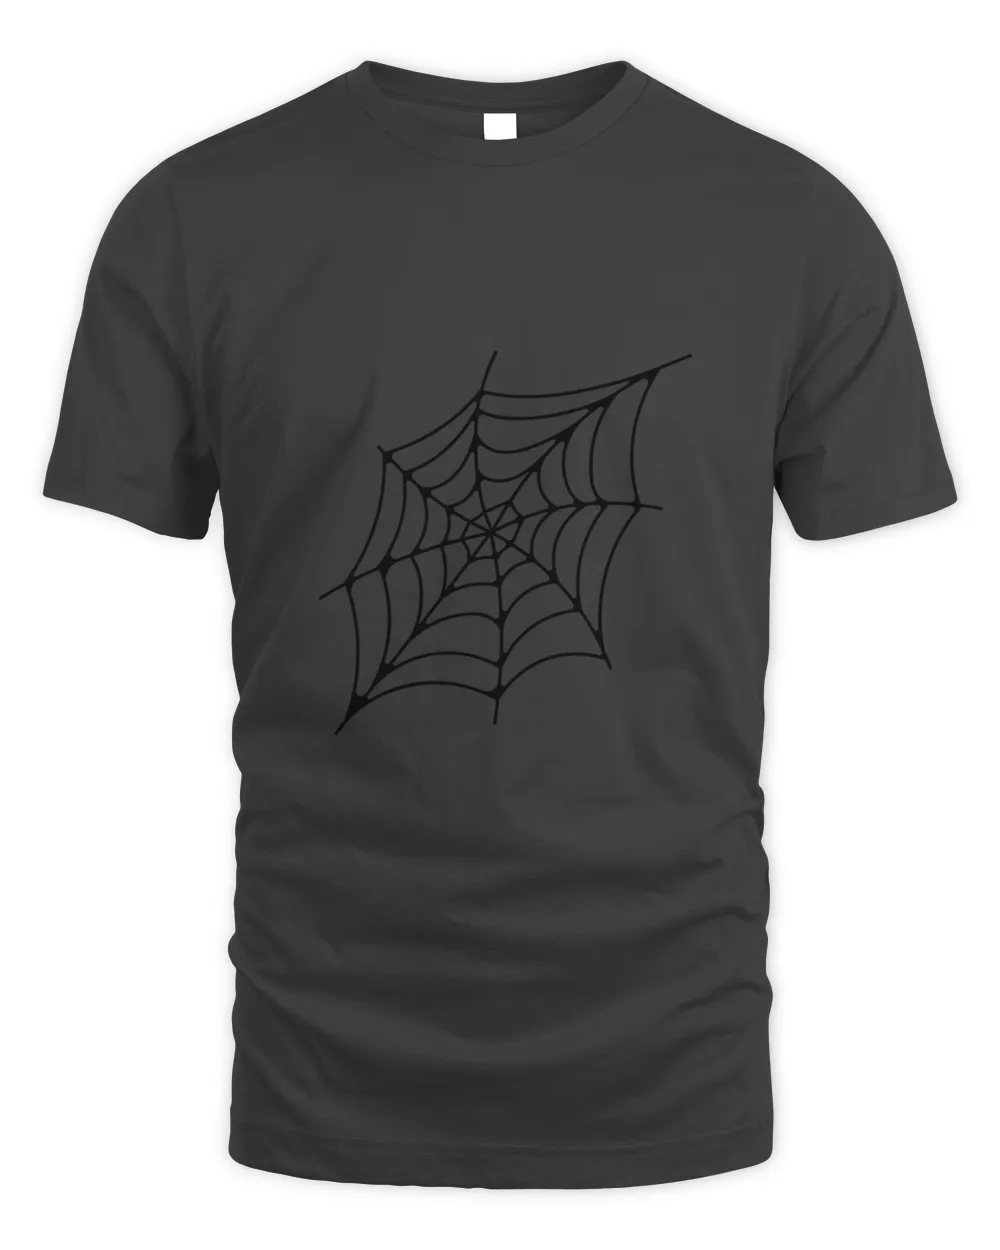 Spiderweb black 03 t shirt hoodie sweater